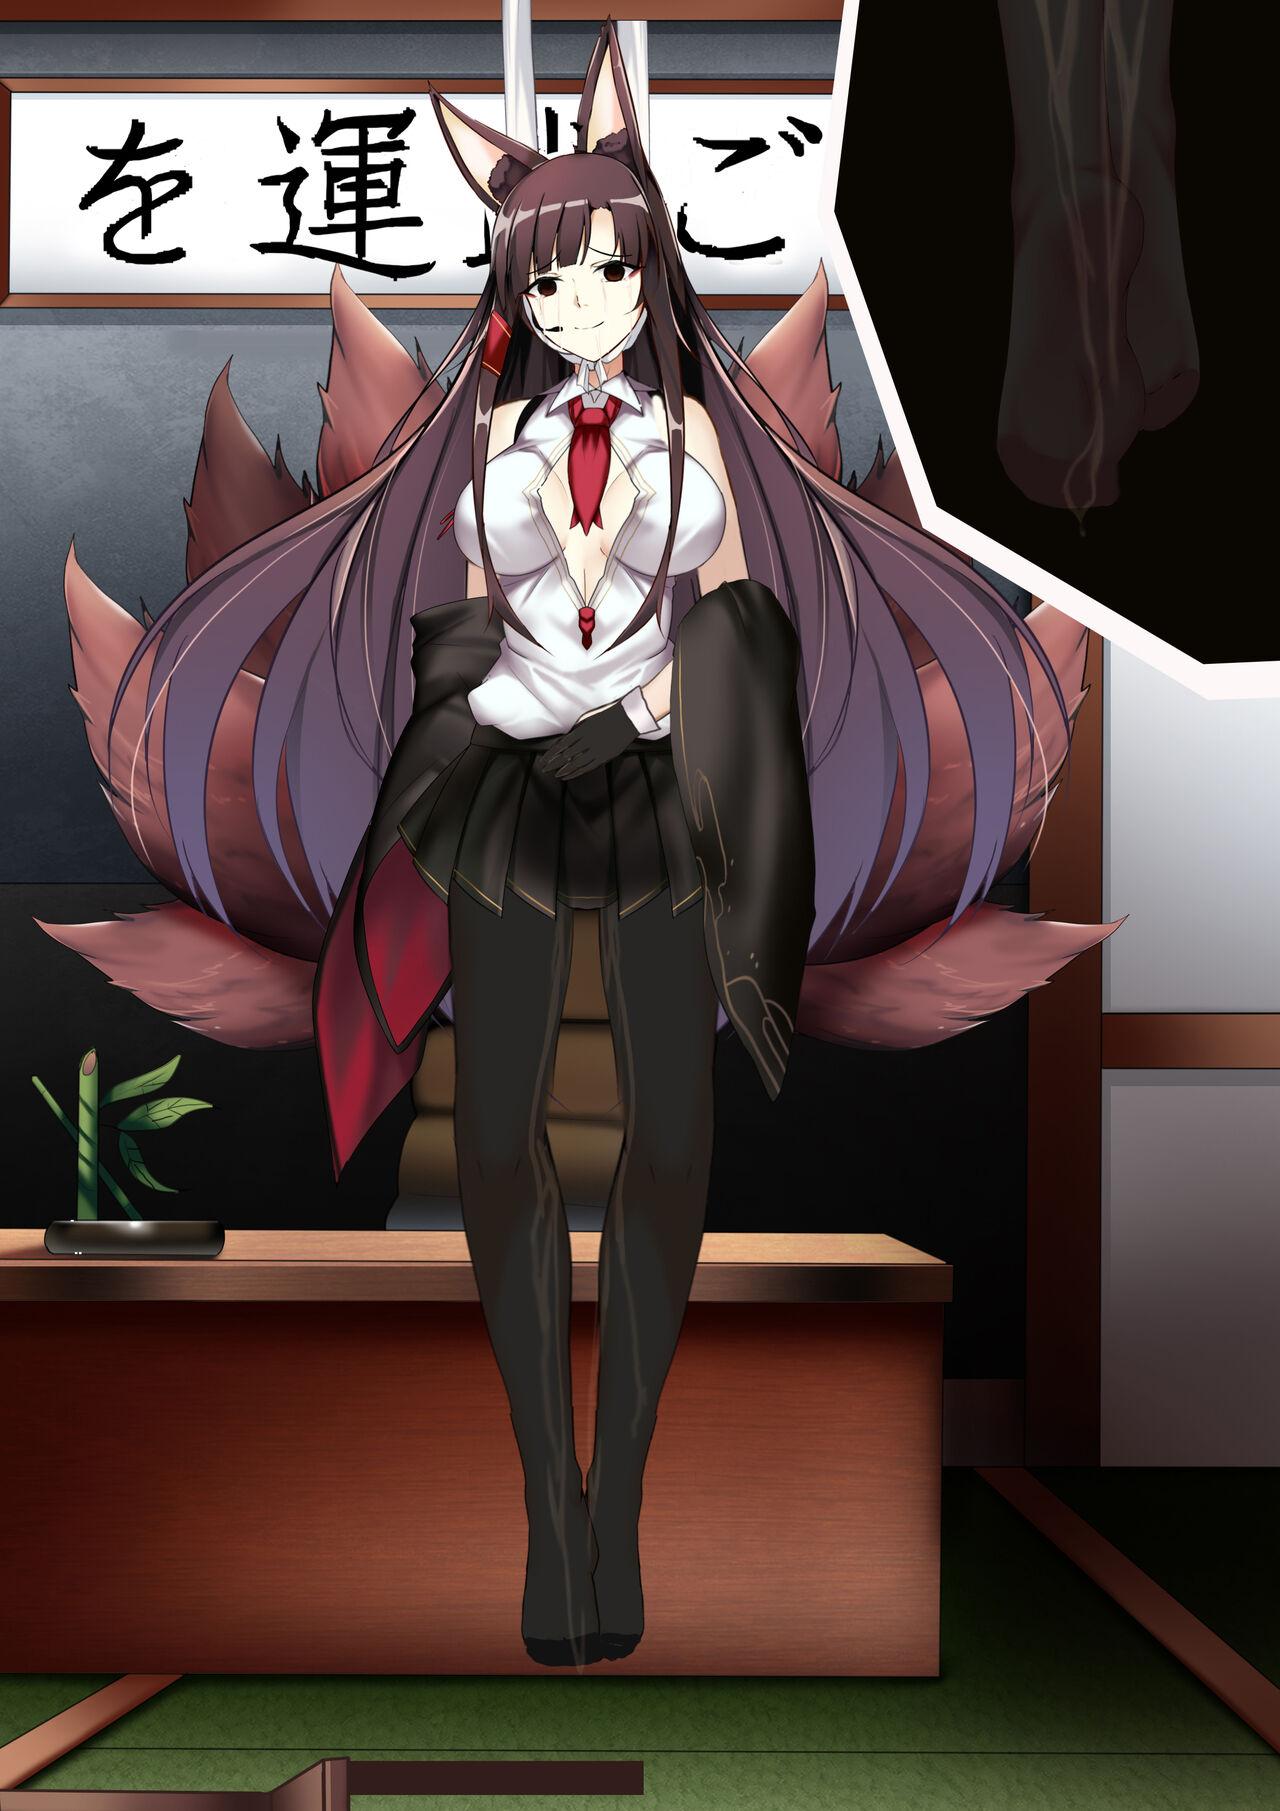 Akagi hanged herself in her office 46